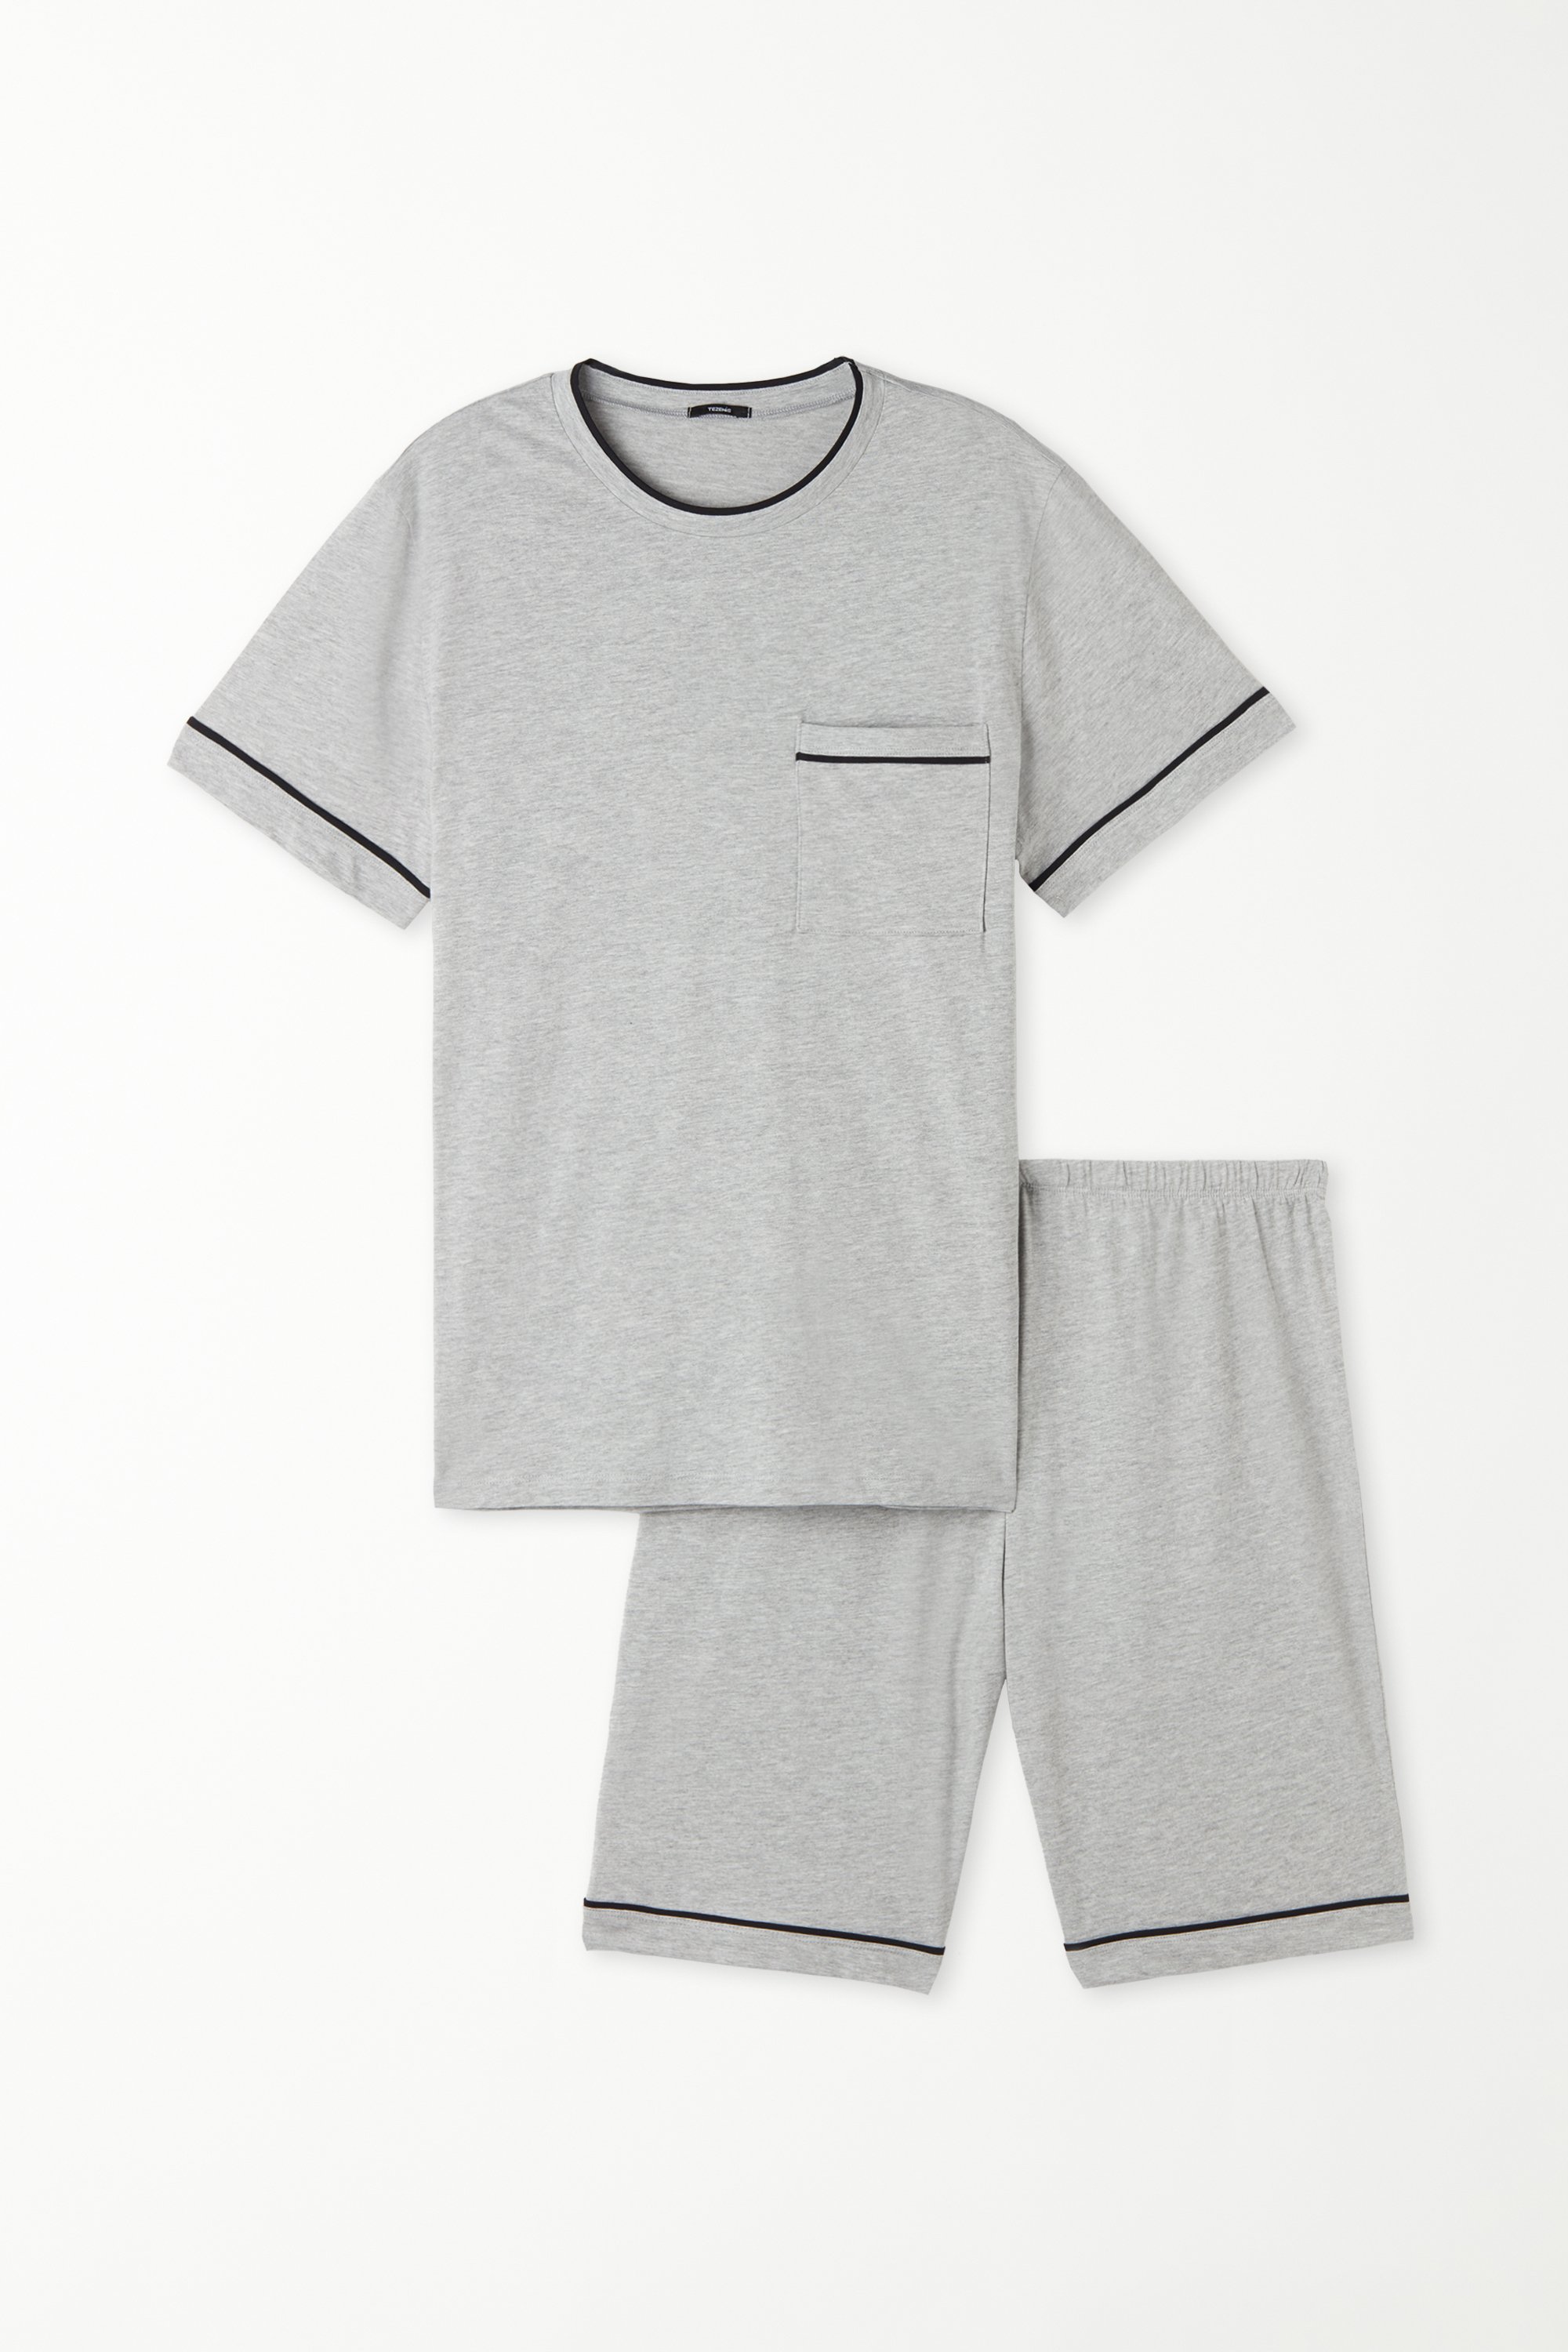 Piped Basic Short Cotton Pyjamas with Pocket